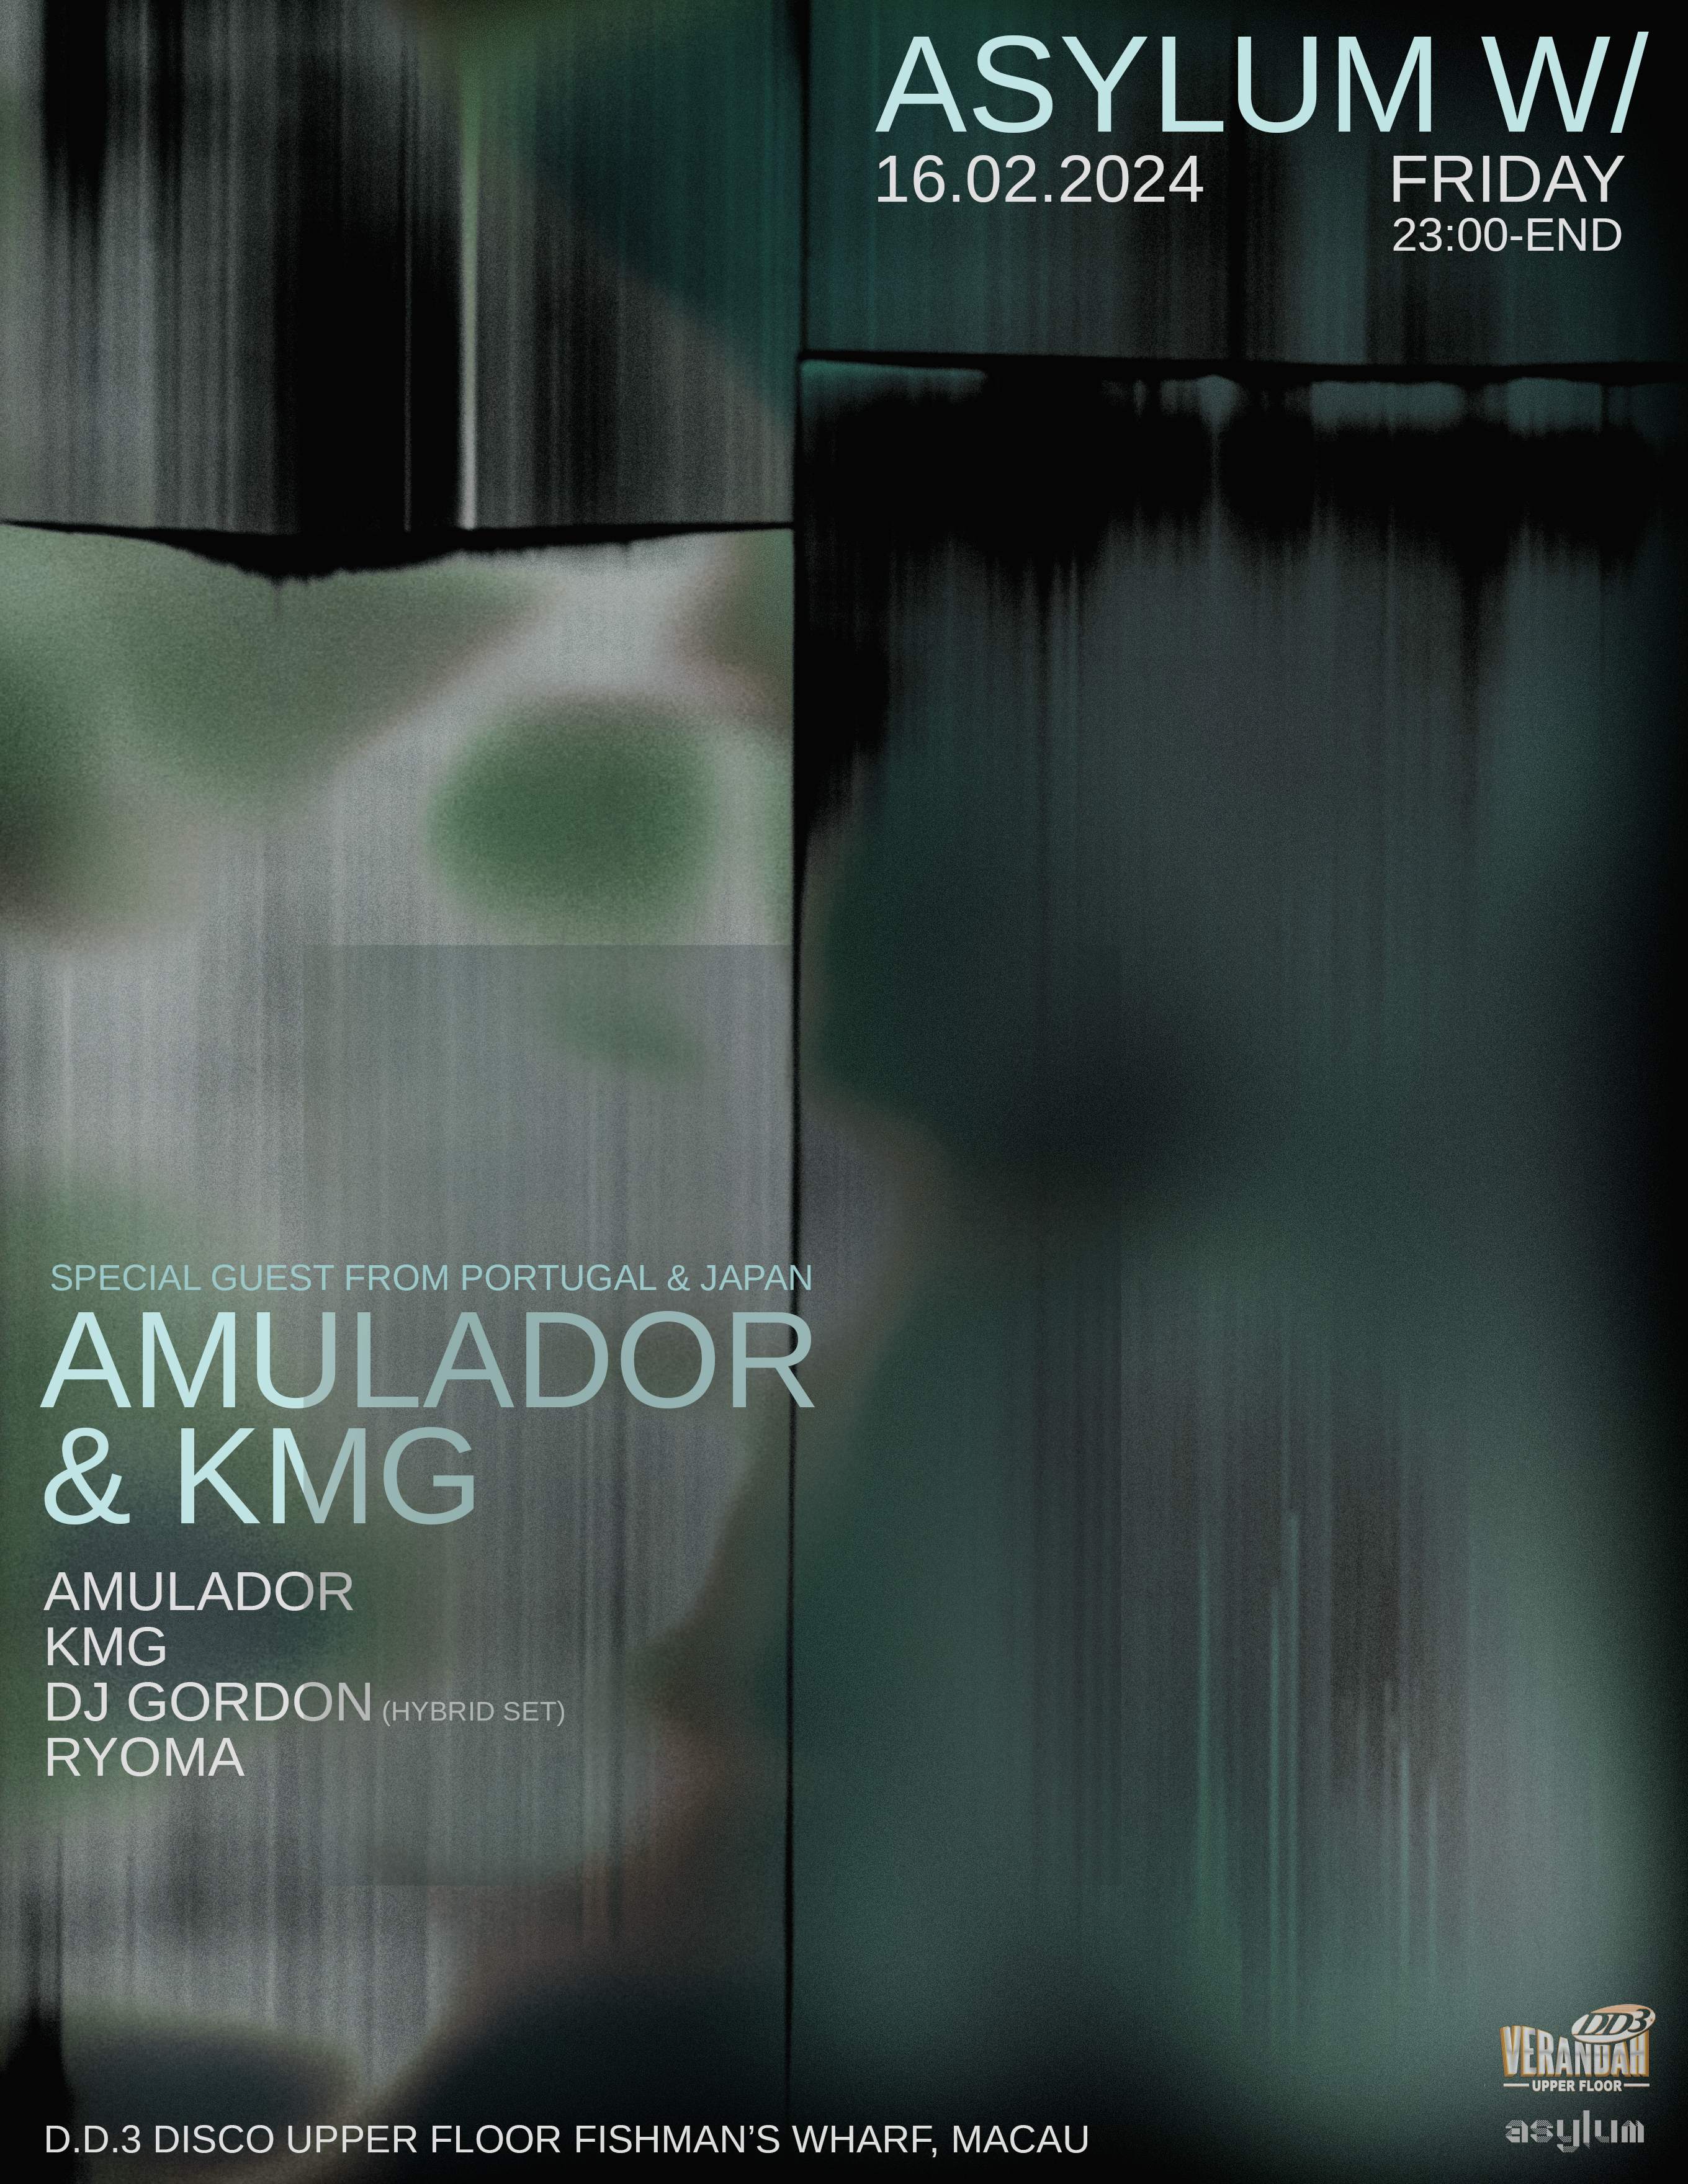 asylum with Amulador & KMG at DD3 Veranda Macau - フライヤー表